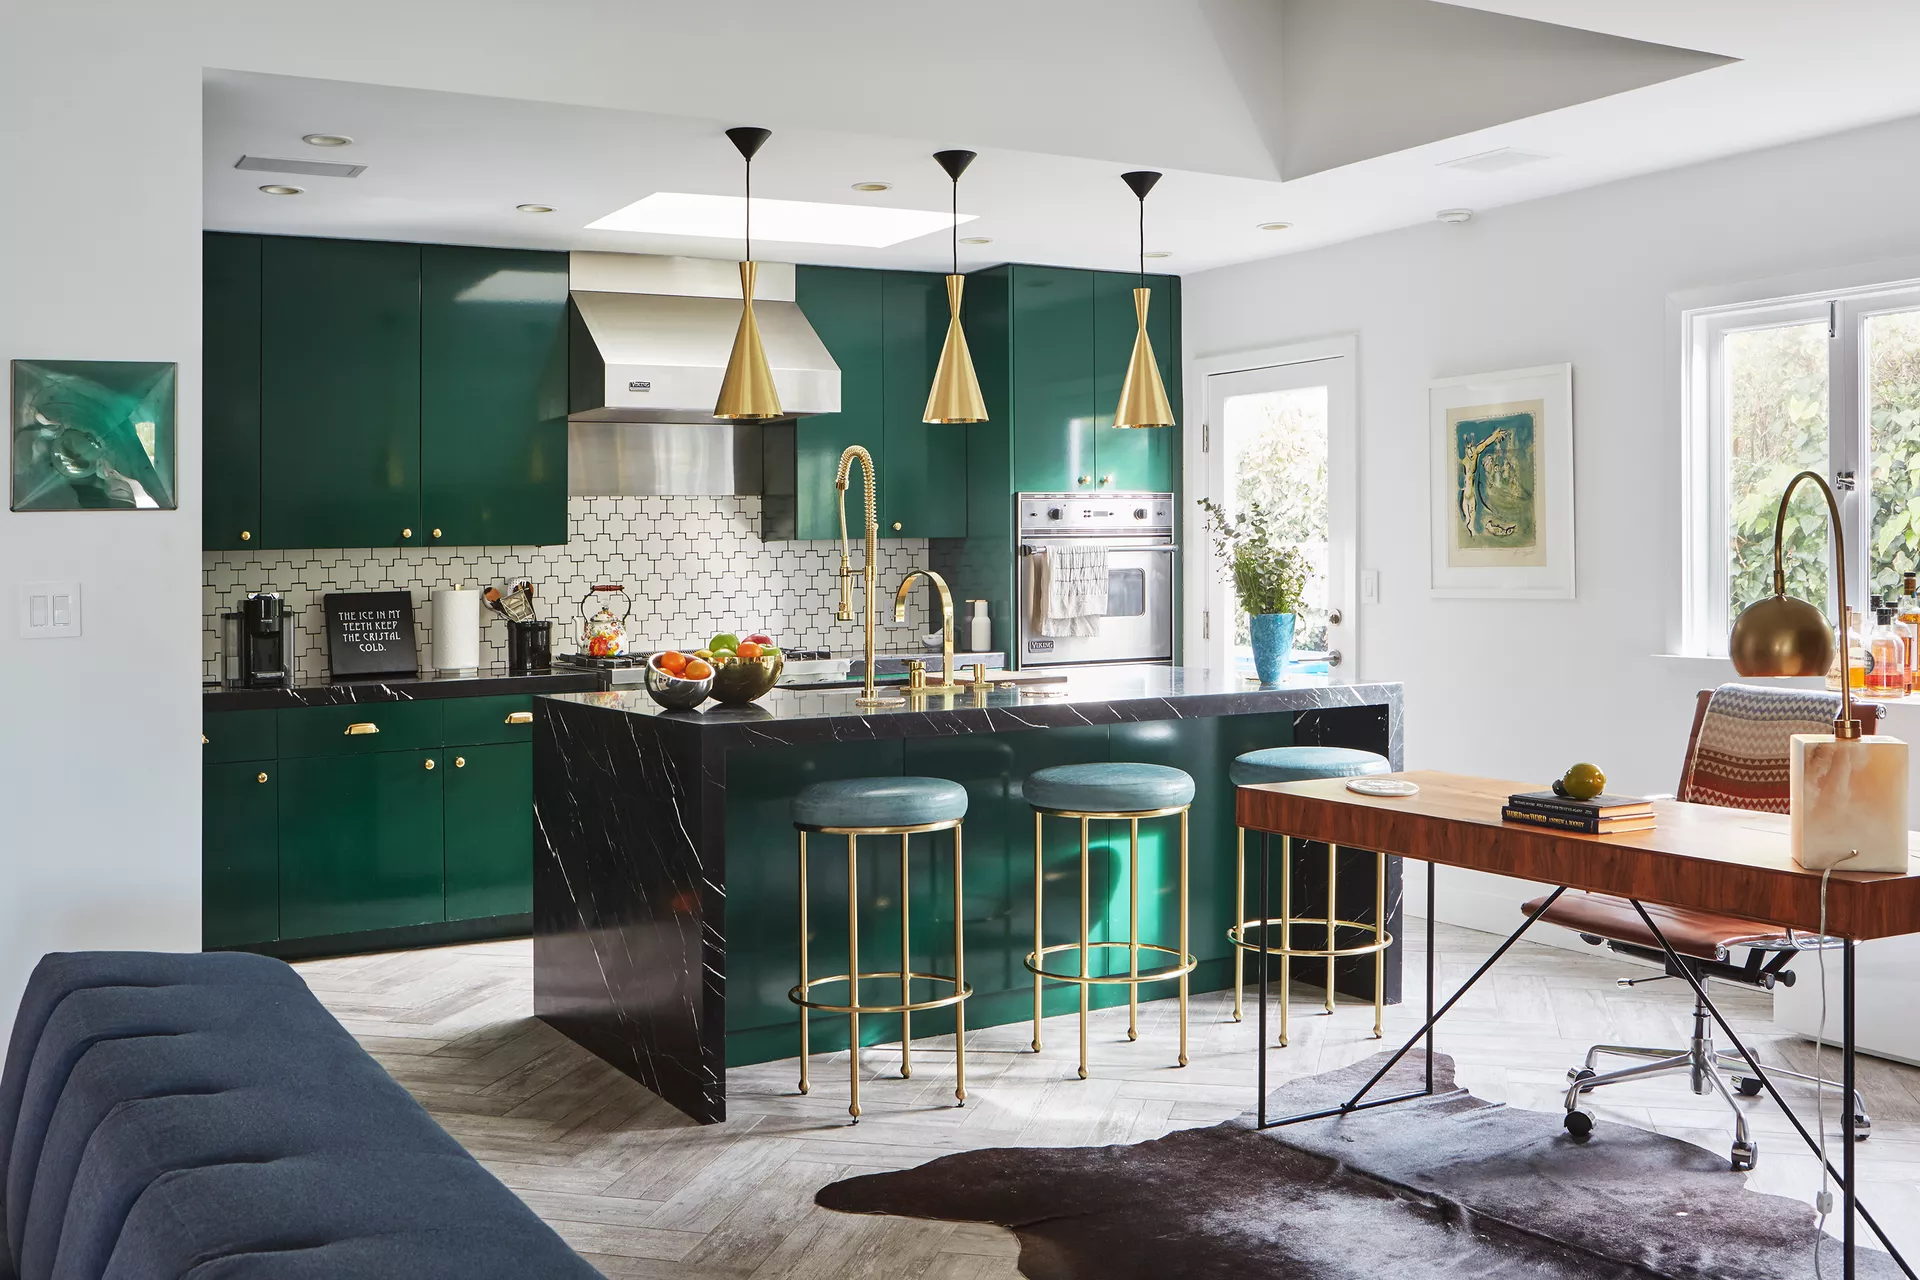 Emerald green in the kitchen - an original interior idea